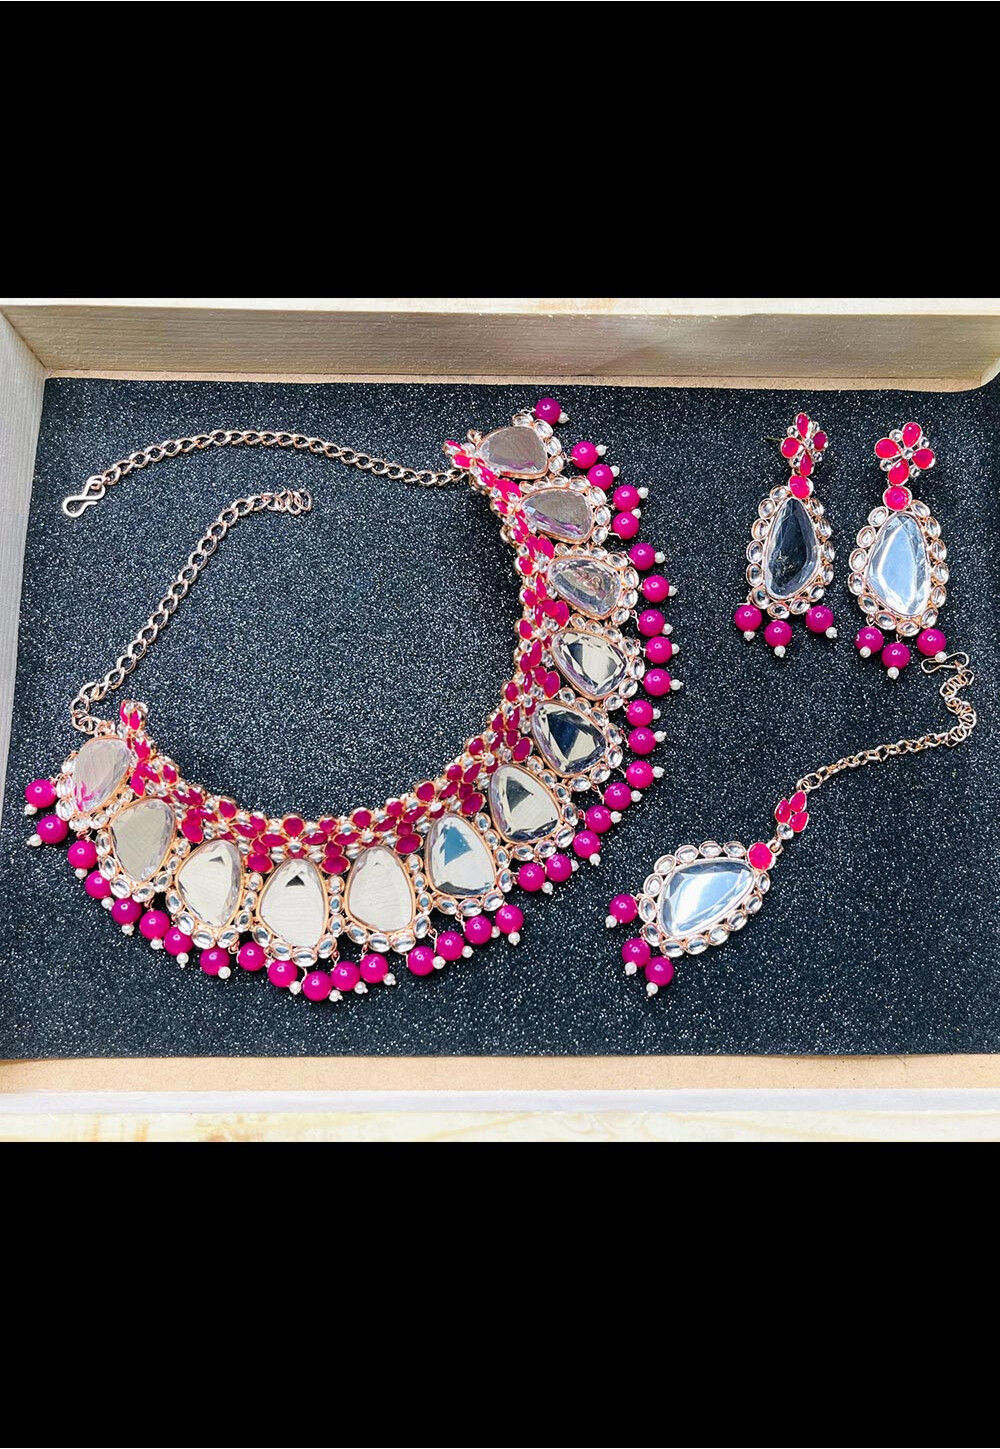 kaleidoscope necklace with stones